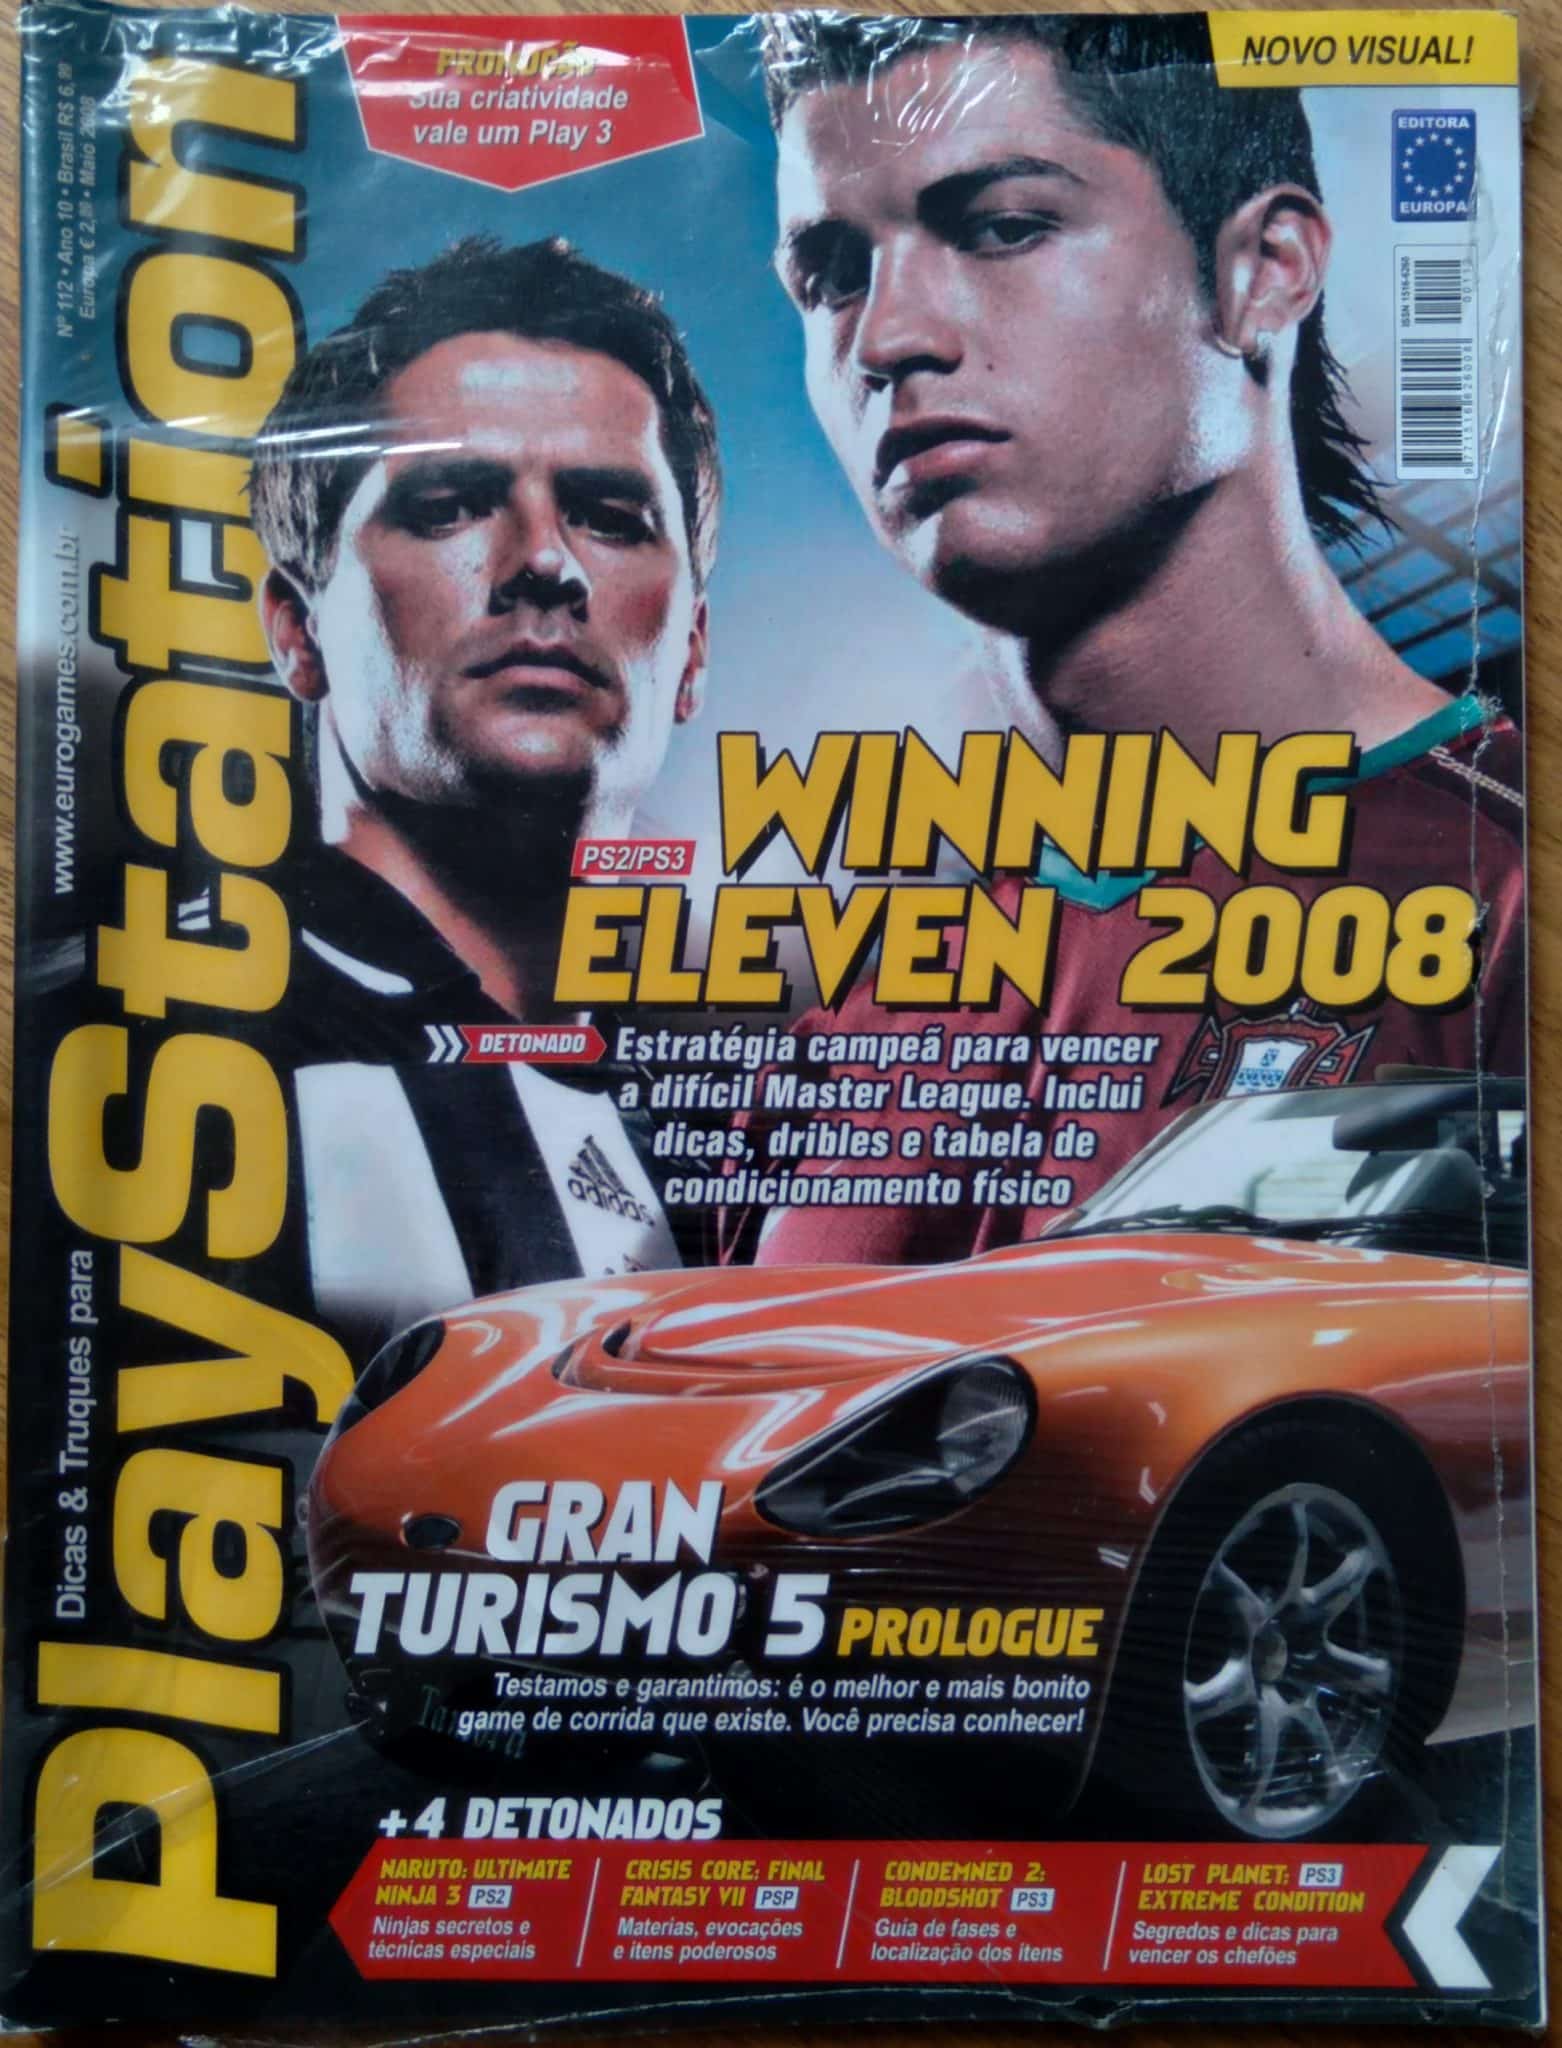 Detonado Gran Turismo 5 - Detonados Gamer, PDF, Corridas de automóveis